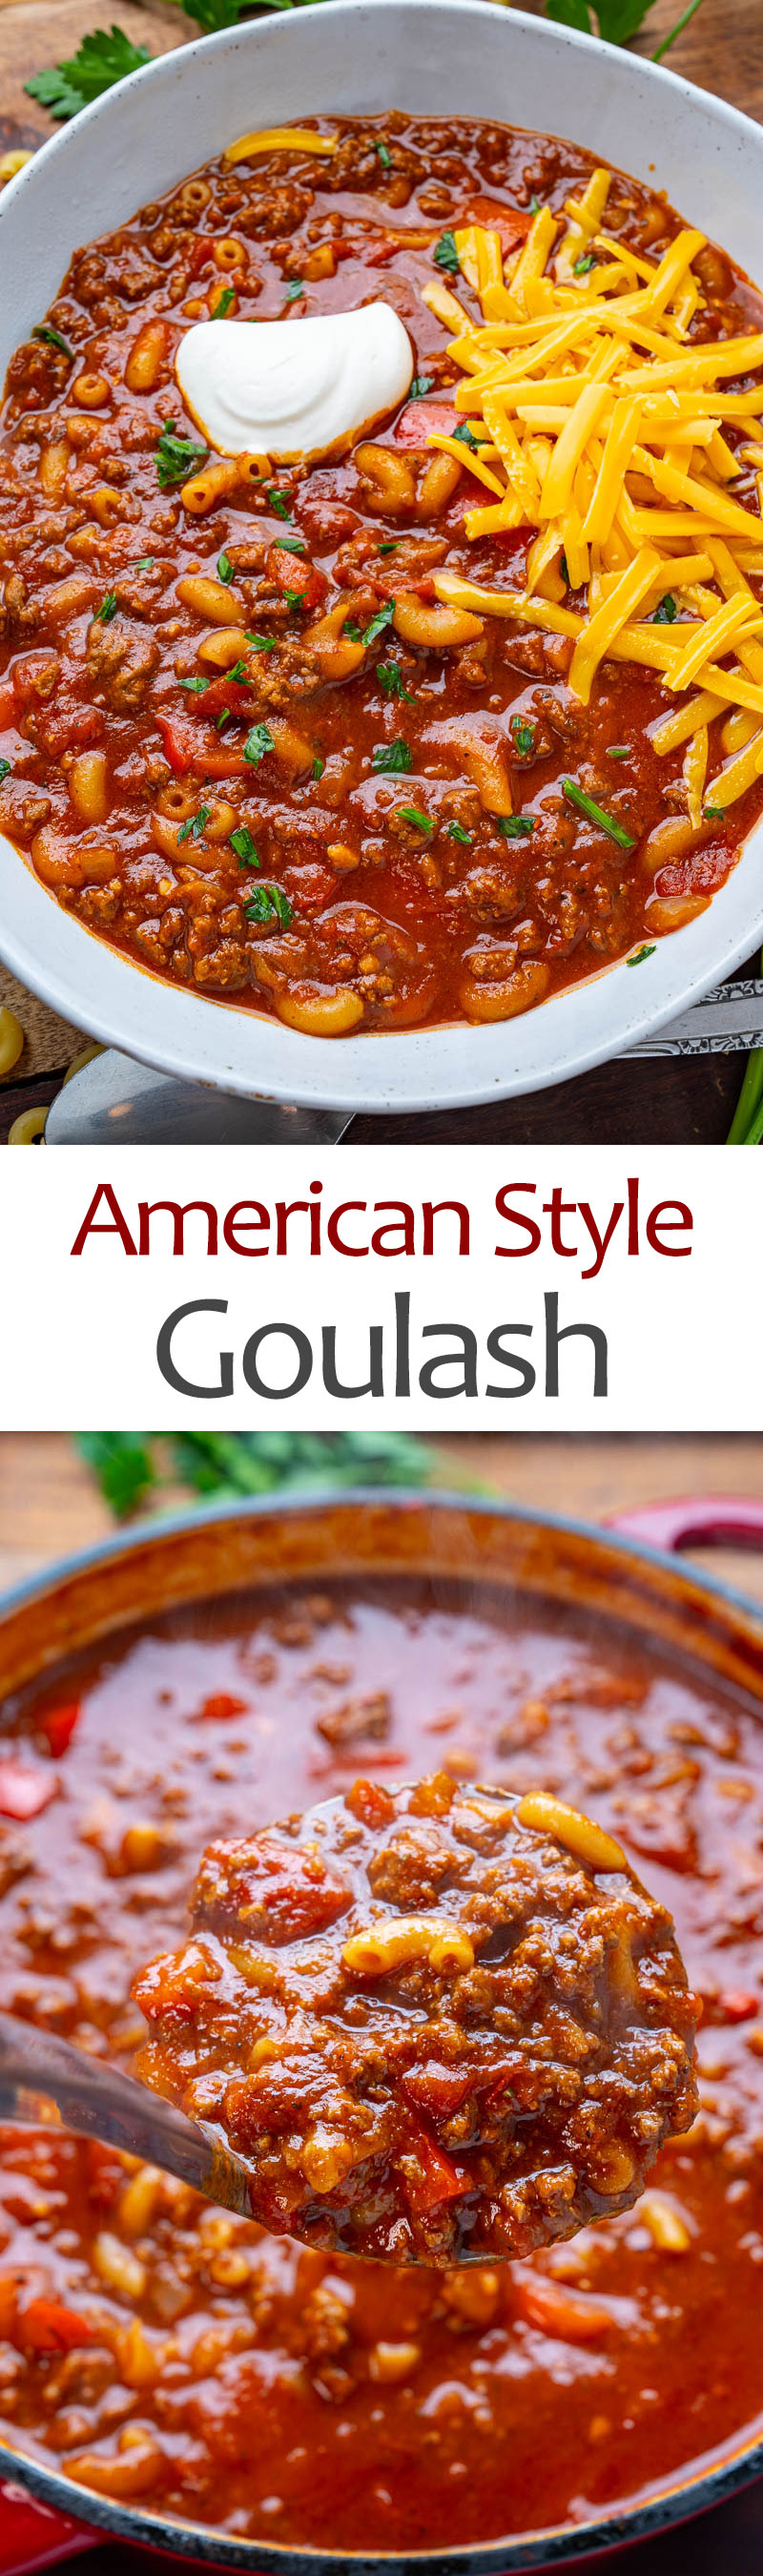 American Style Goulash